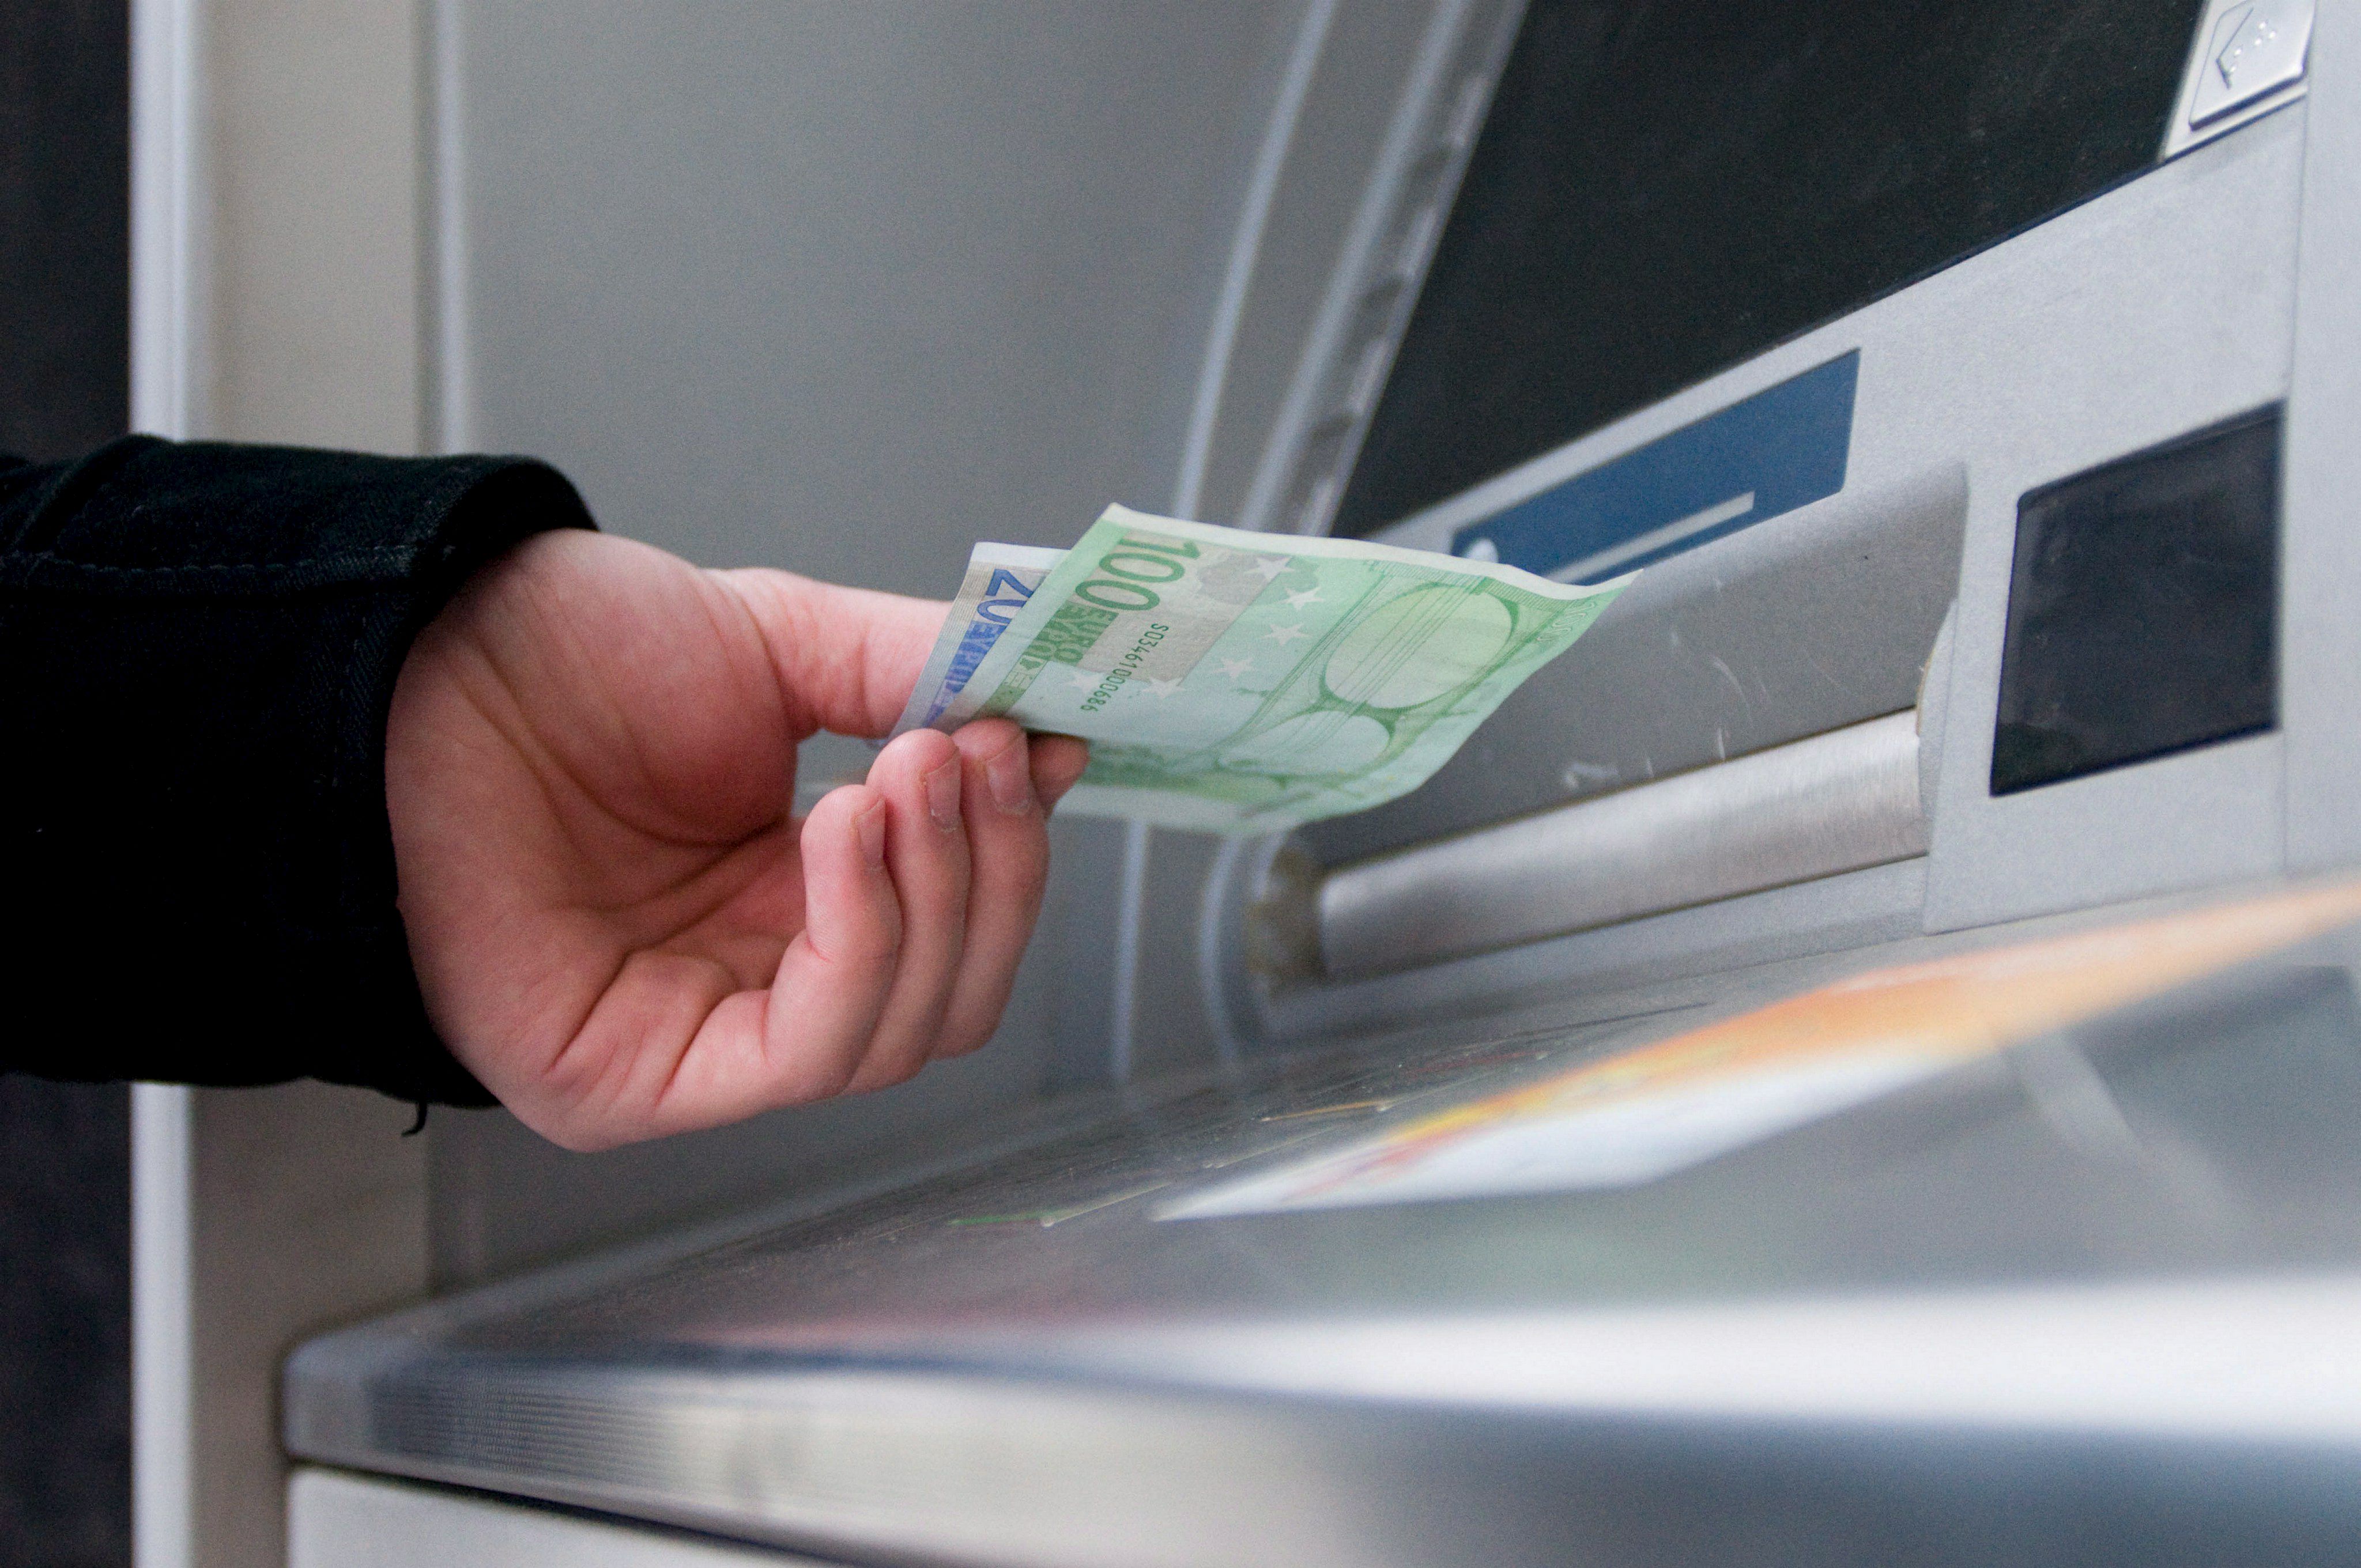 Un hombre saca euros de un cajero automático